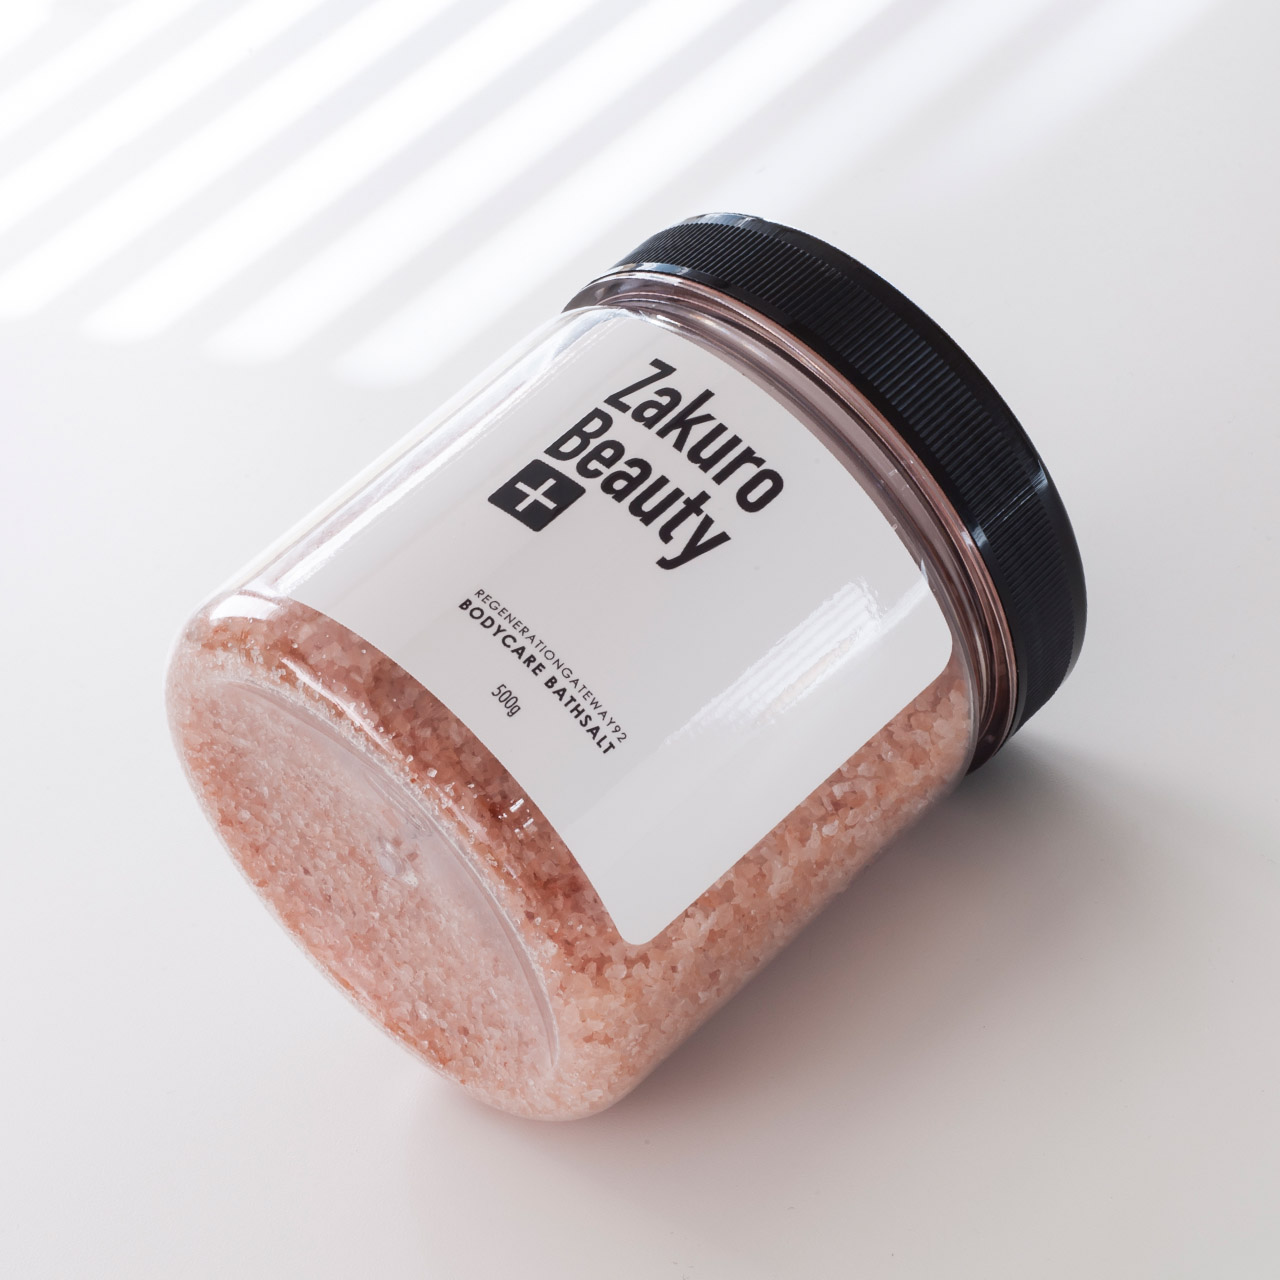 Zakuro Beauty + RG92 Bodycare Bath Salt